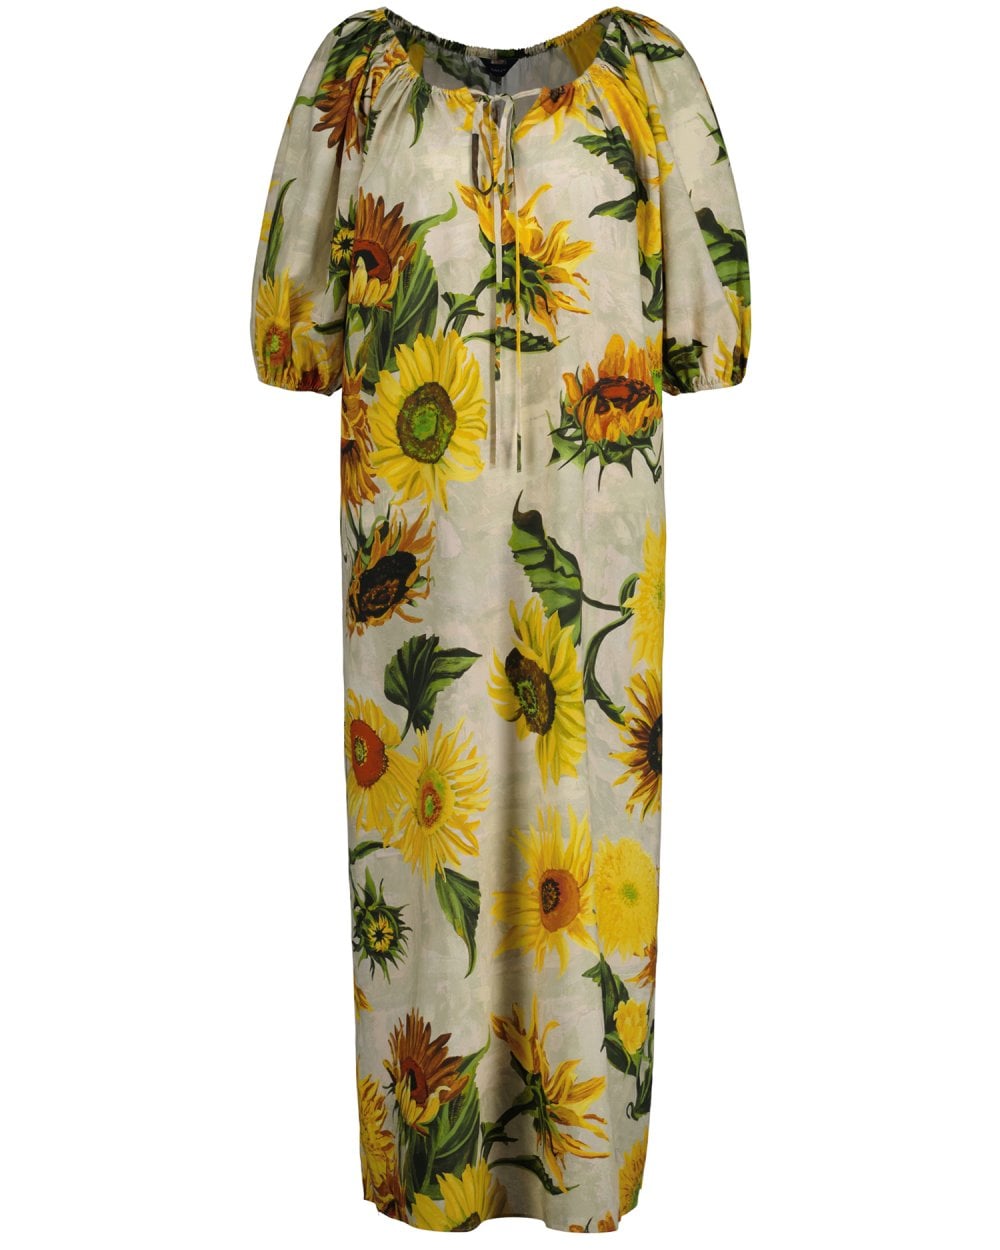 Gathered Sunflower Print Dress